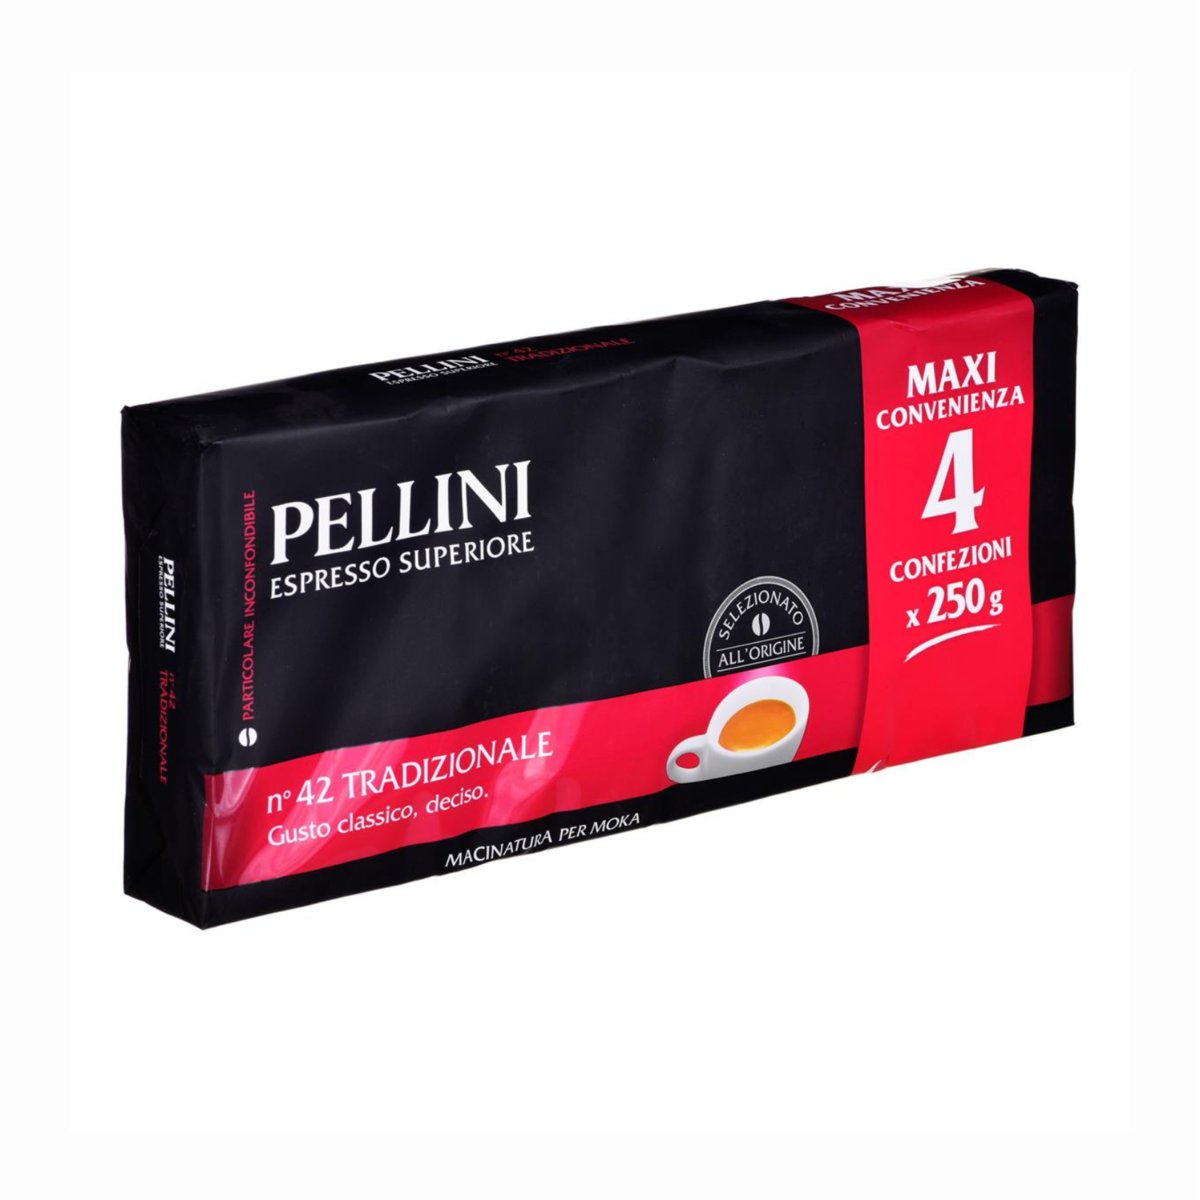 Pellini Espresso Superiore Nr 42 Tradycyjne 4 X 250